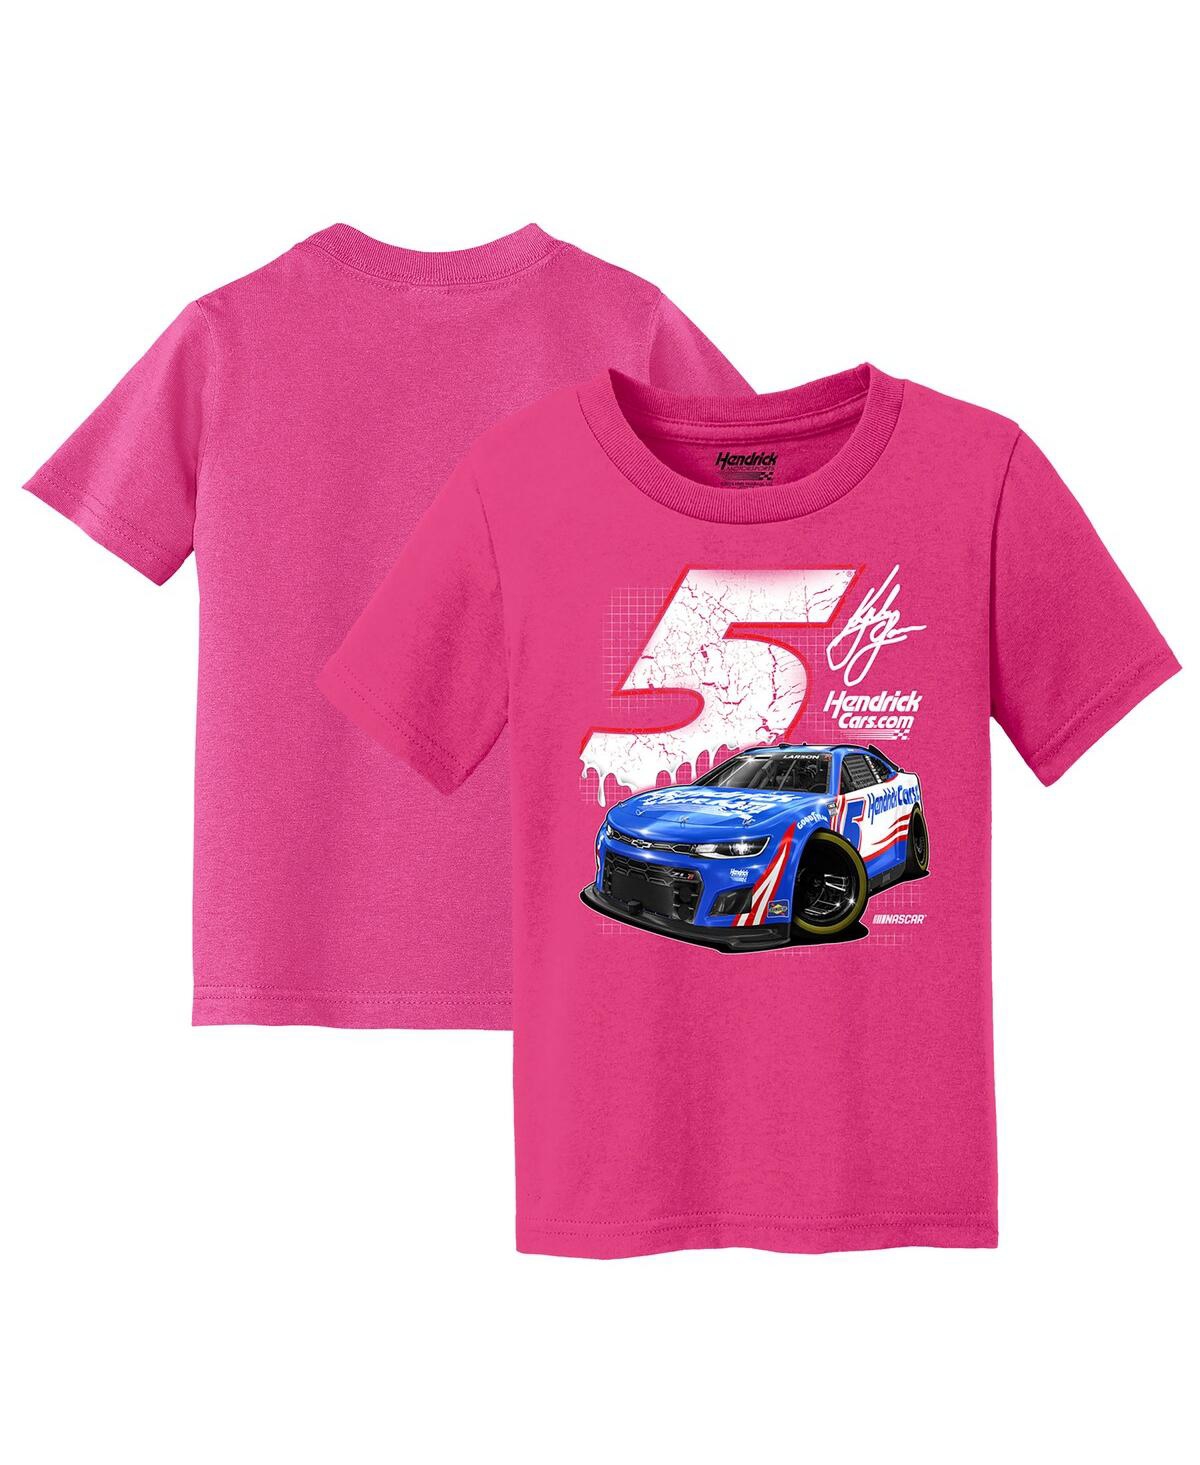 Shop Hendrick Motorsports Team Collection Girls Toddler  Pink Kyle Larson Car T-shirt